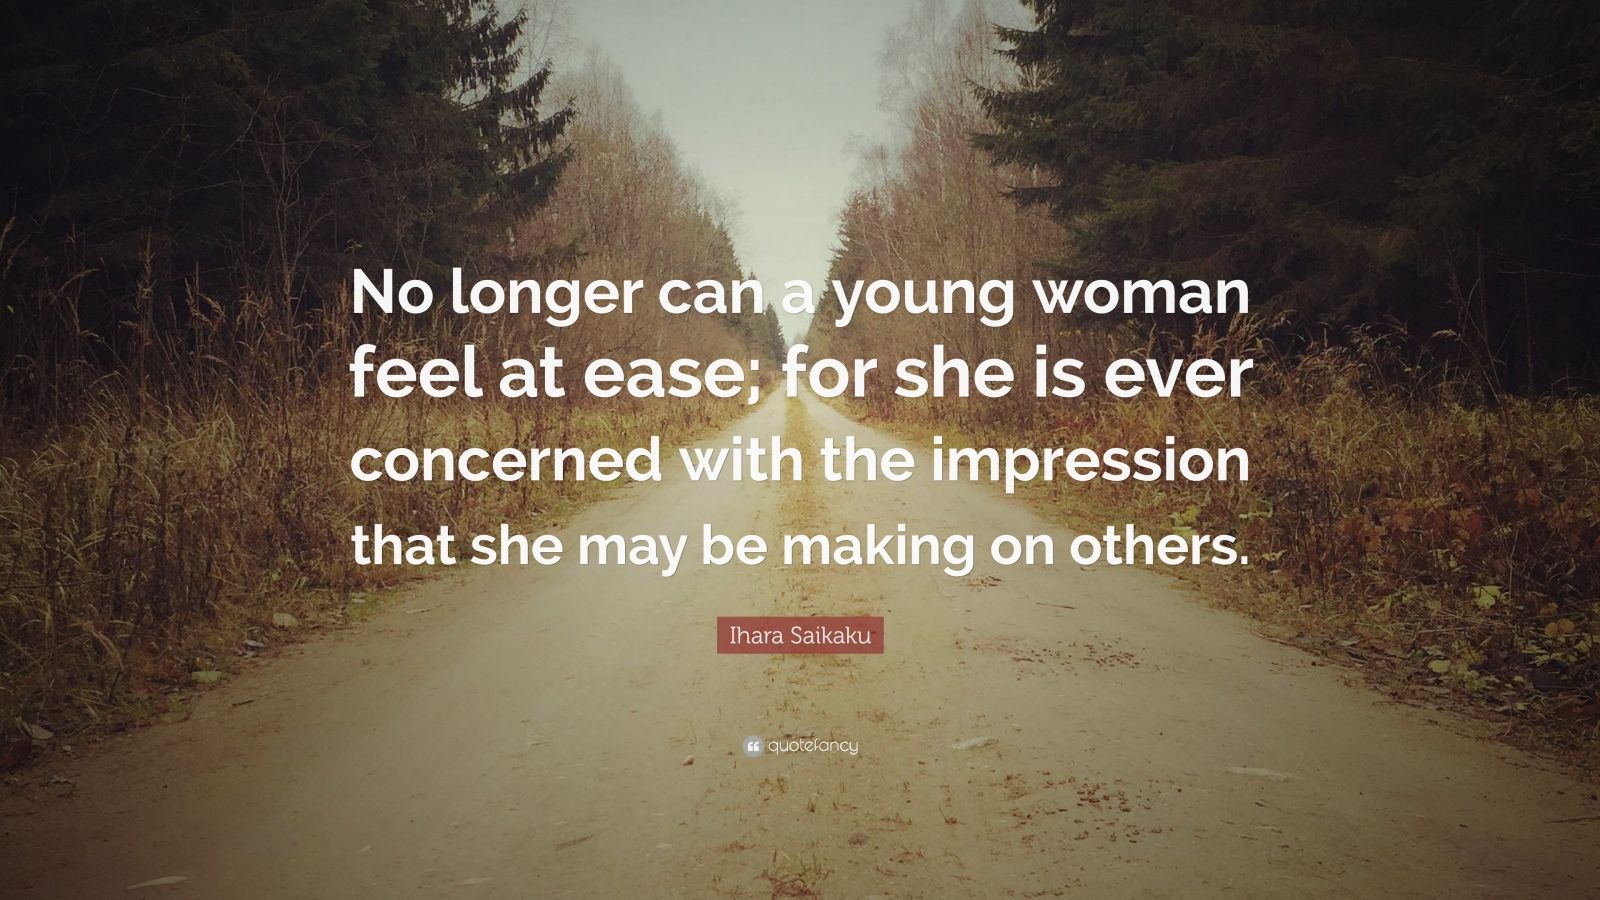 Ihara Saikaku Quote: “No longer can a young woman feel at ease; for she ...